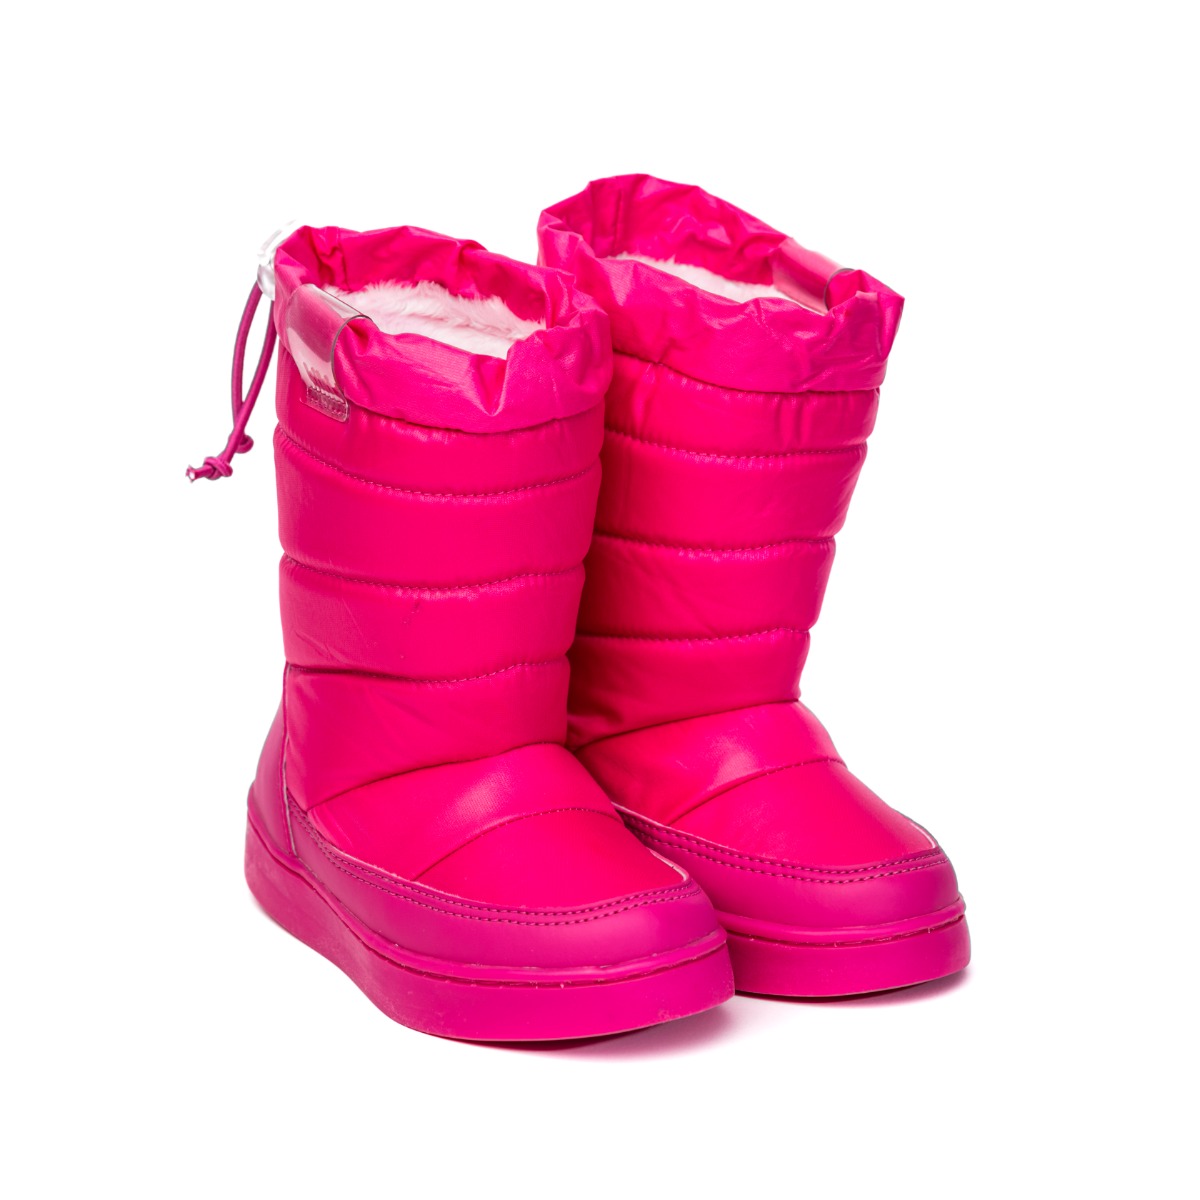 Cizme imblanite Bibi Shoes, Urban Boots, Rosa (Rosa) imagine 2022 protejamcopilaria.ro